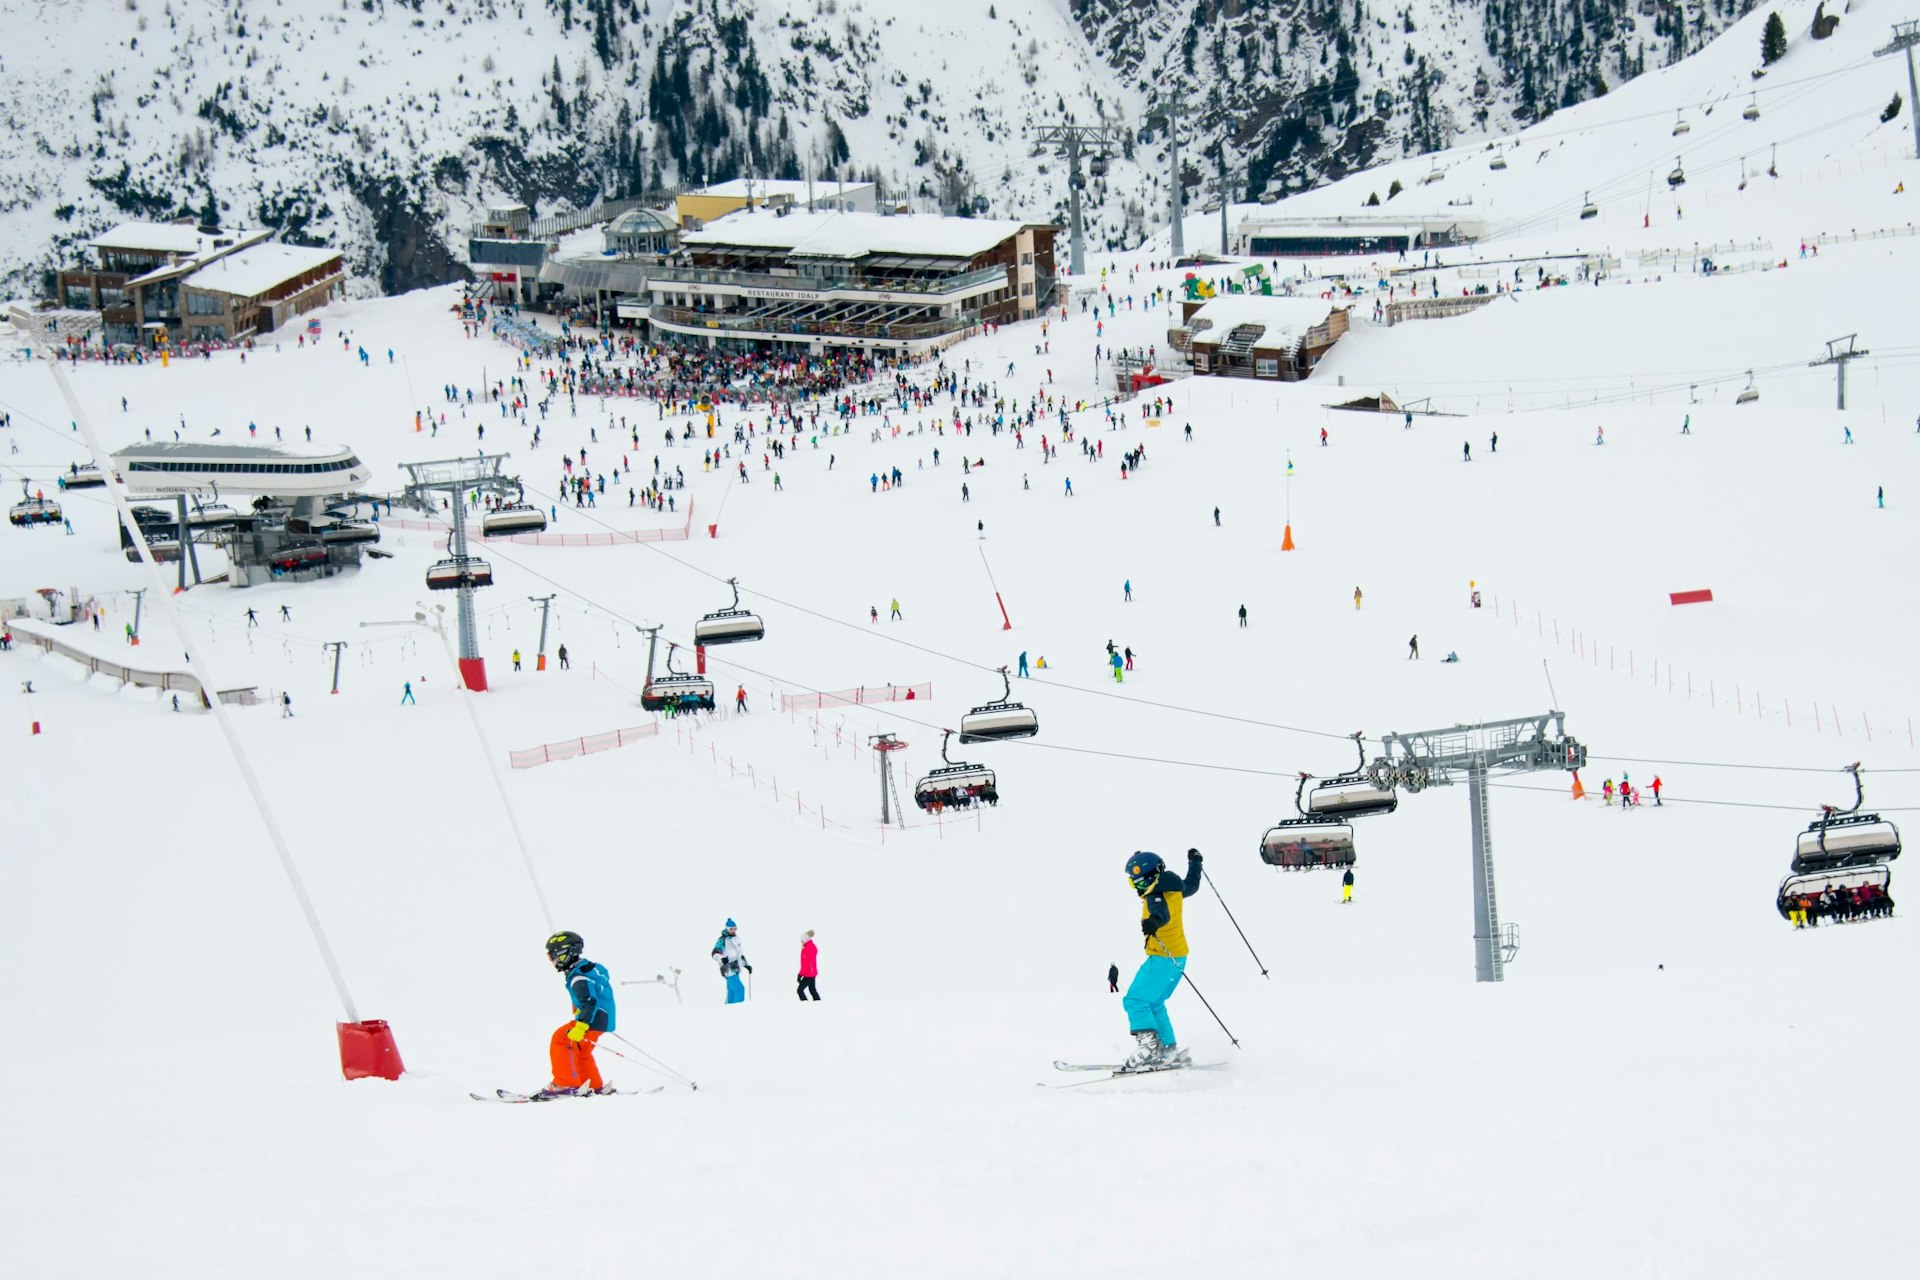 Skiers in the ski resort Ischgl in Austria